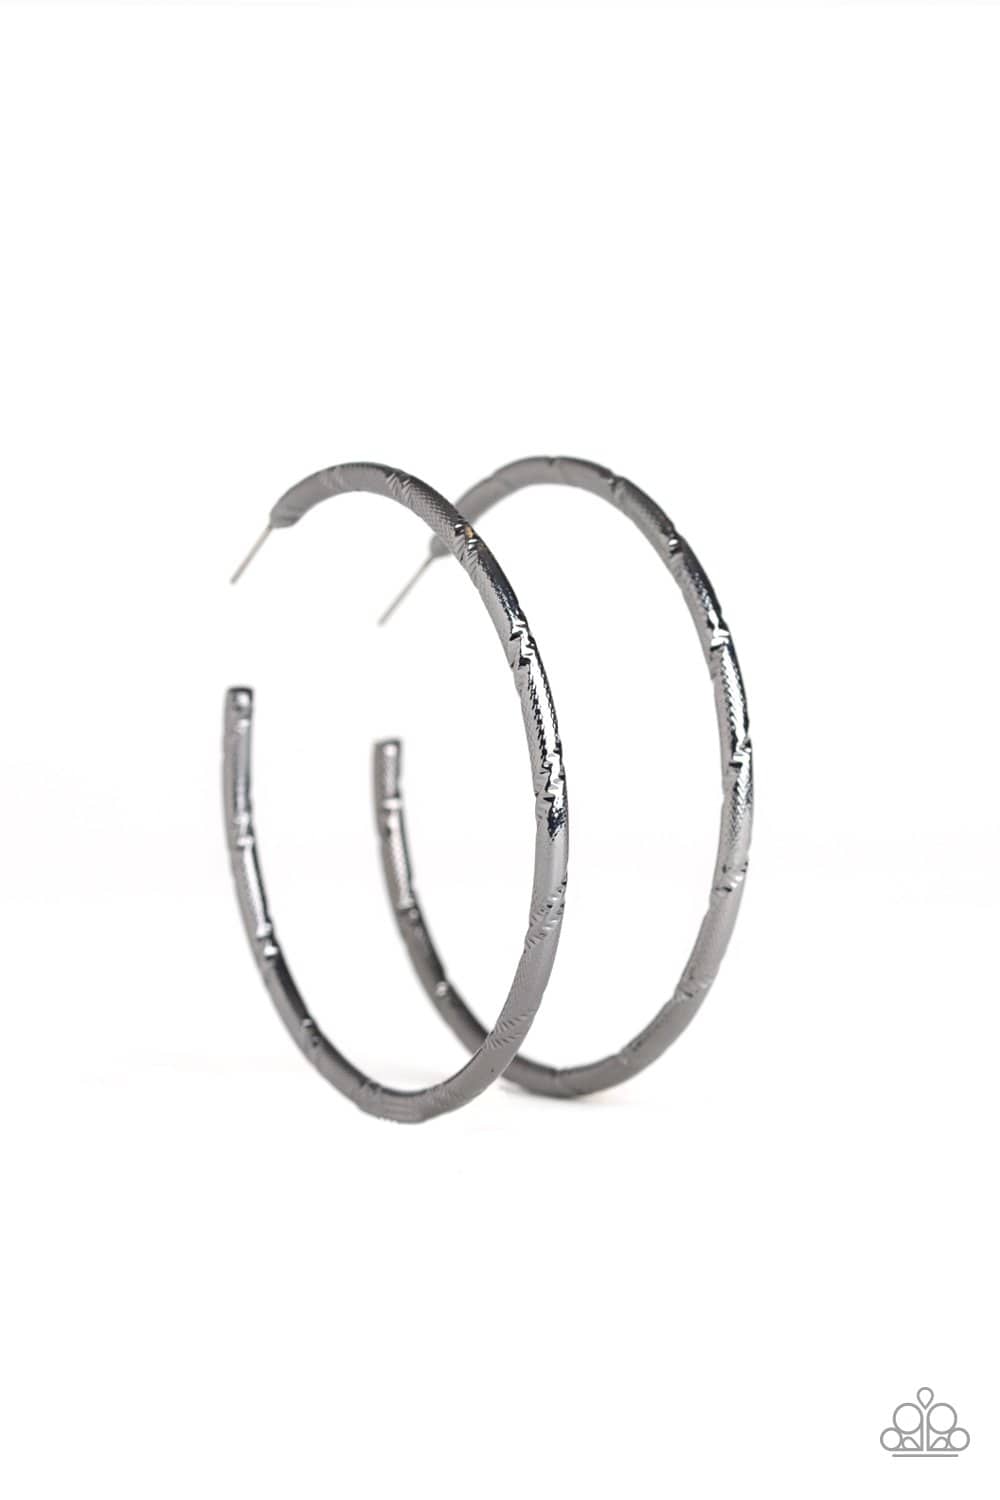 A Double Take - Black Gunmetal Hoop Earrings - Paparazzi Accessories - GlaMarous Titi Jewels